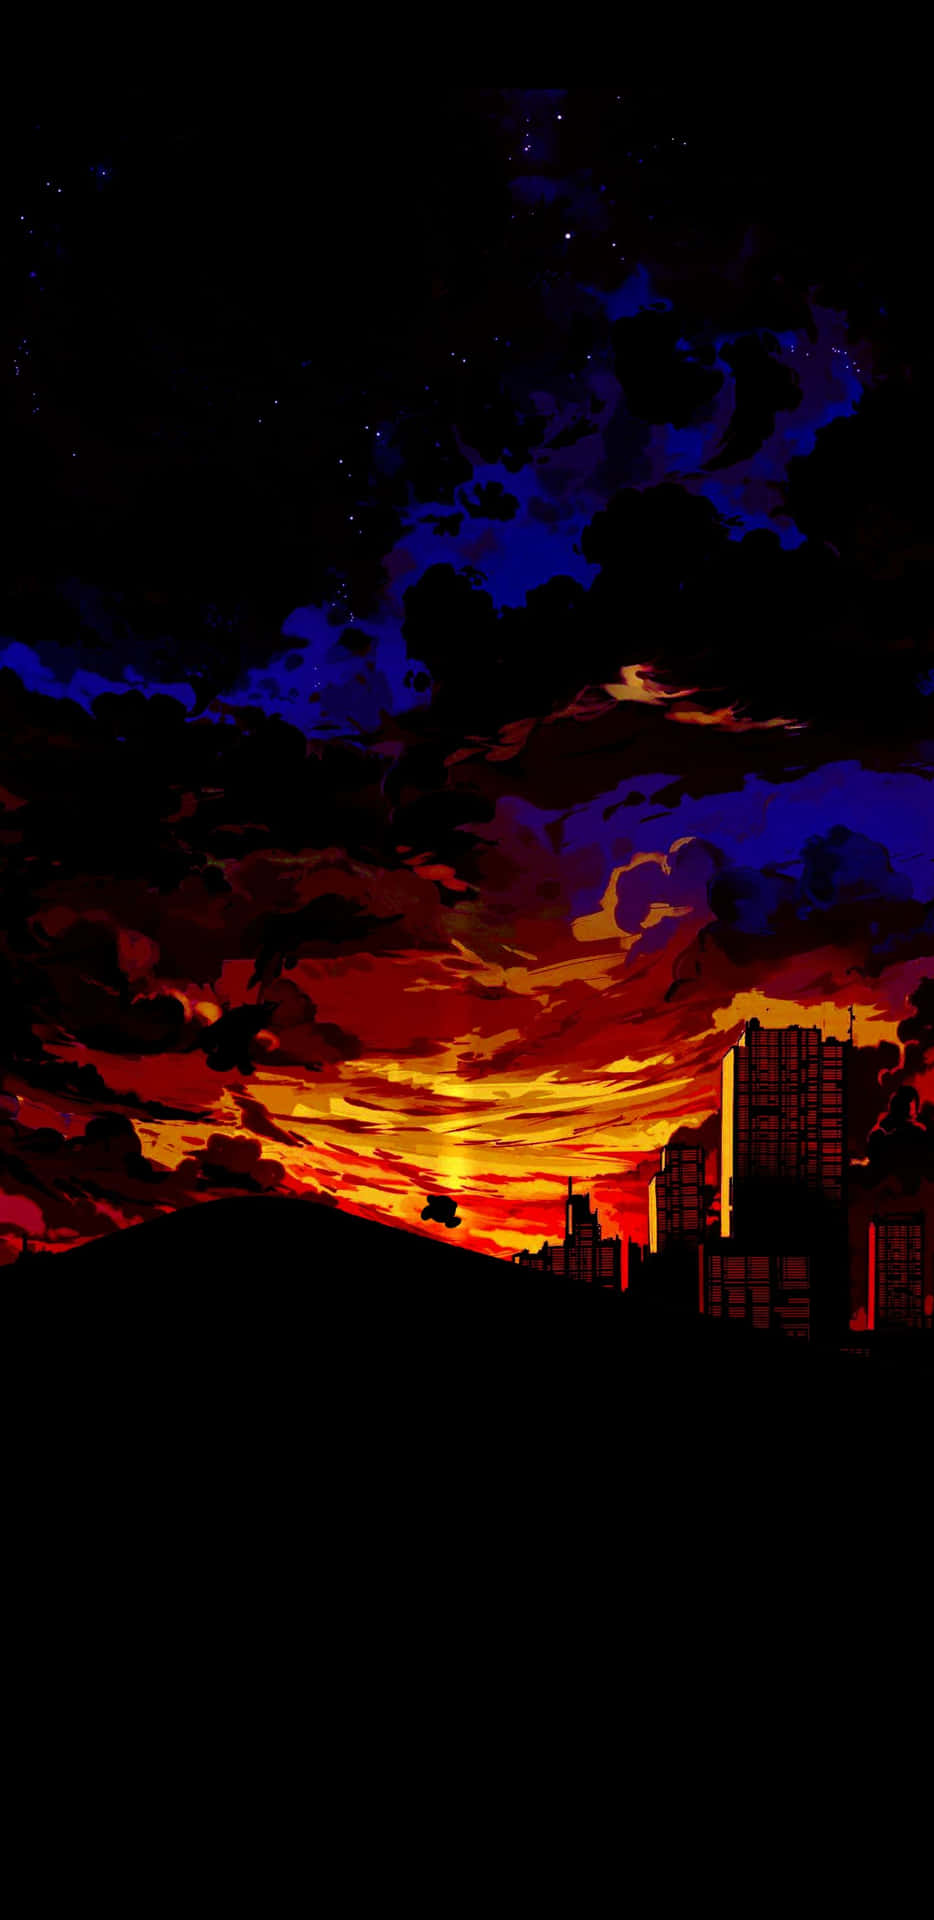 A beautiful sunset landscape from an anime world Wallpaper